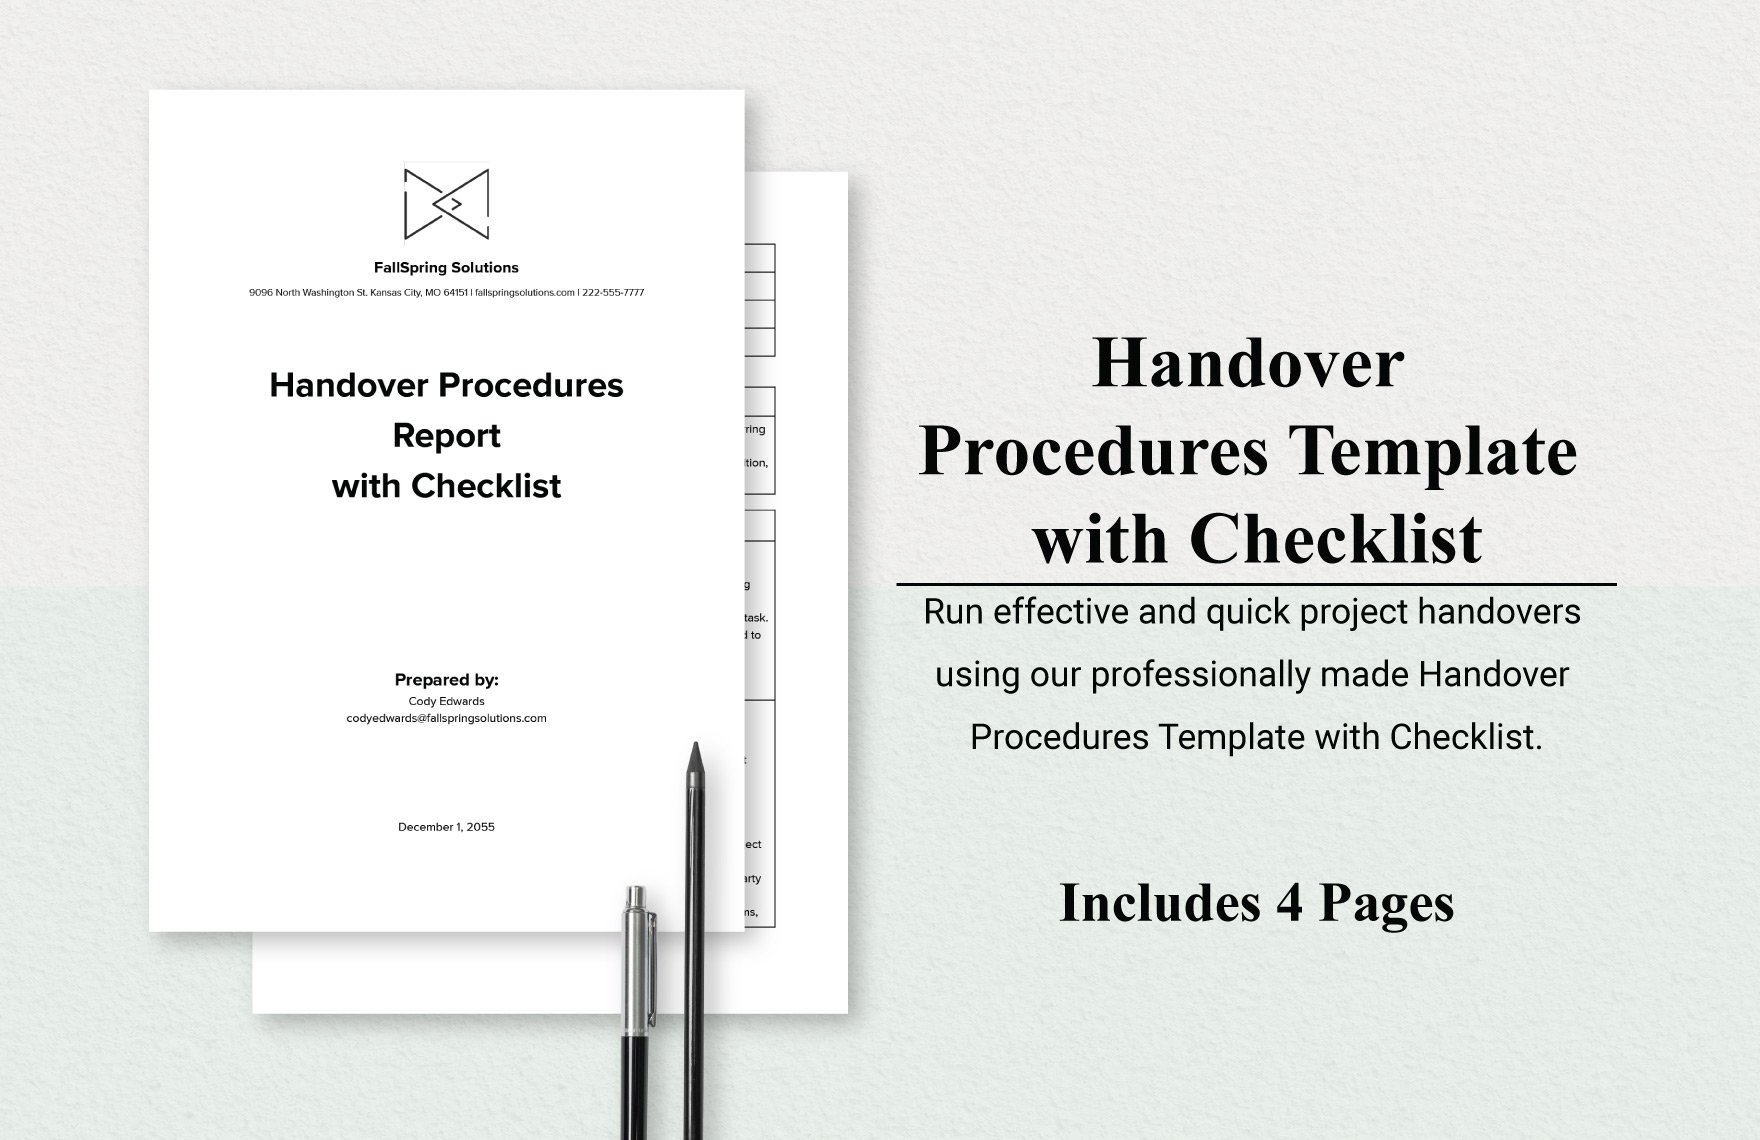 Handover Procedures Template with Checklist